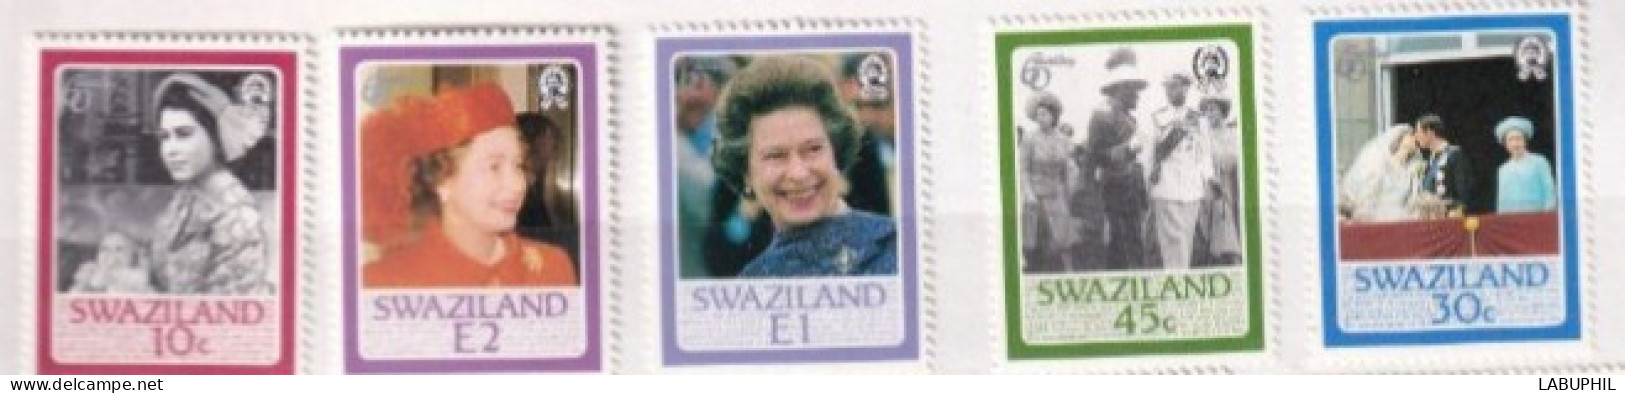 SWAZILAND  MNH 1986  Elizabeth 2 - Swaziland (1968-...)